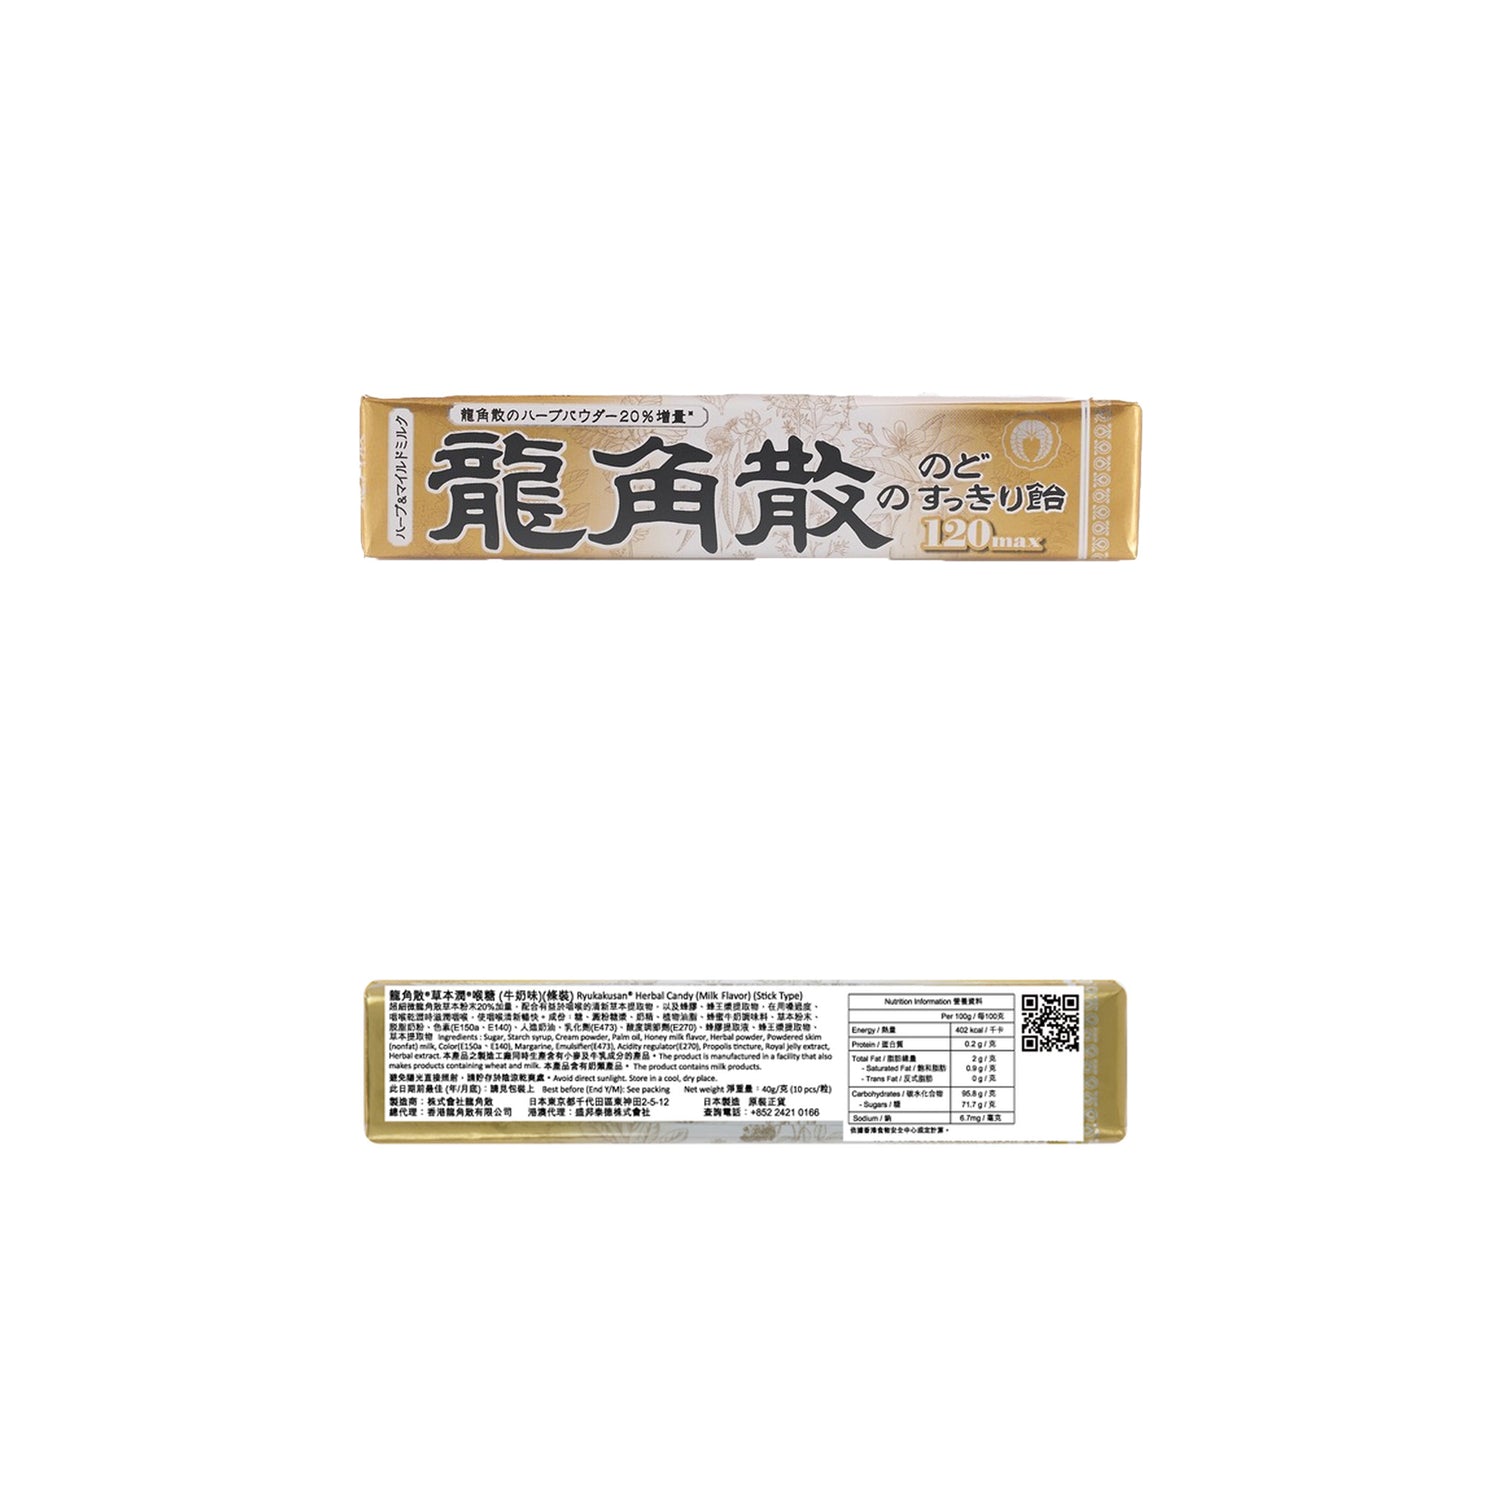 RYUKAKUSAN Throat Refreshing Herbal Drops Mint Flavor 15 Drops 80g日本RYUKAKUSAN龙角散 夹心润喉糖 薄荷口味 15粒 ...